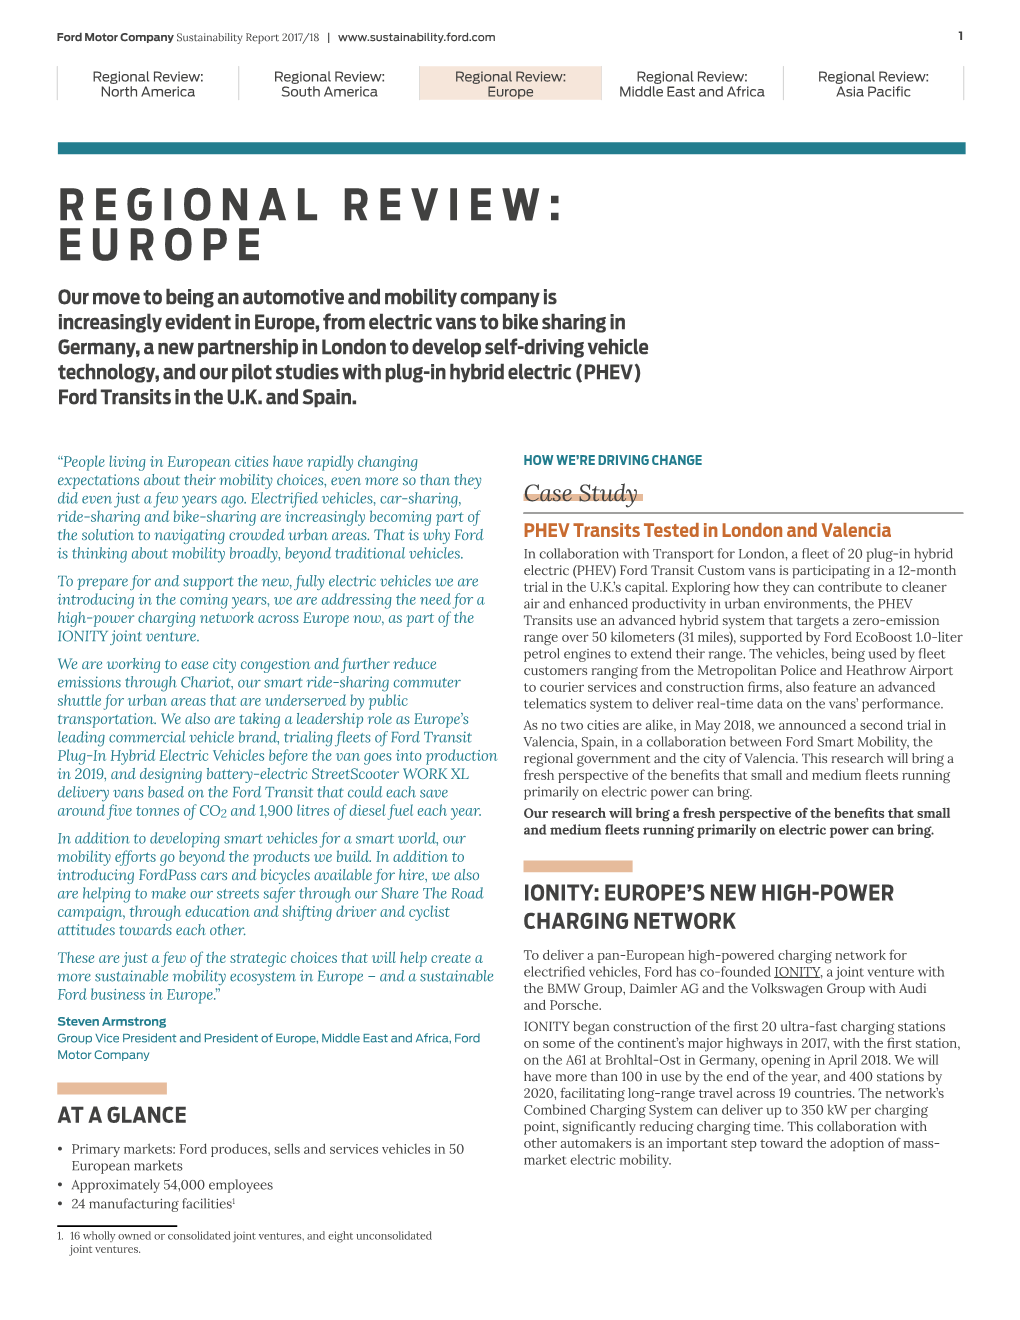 Regional Review: Europe